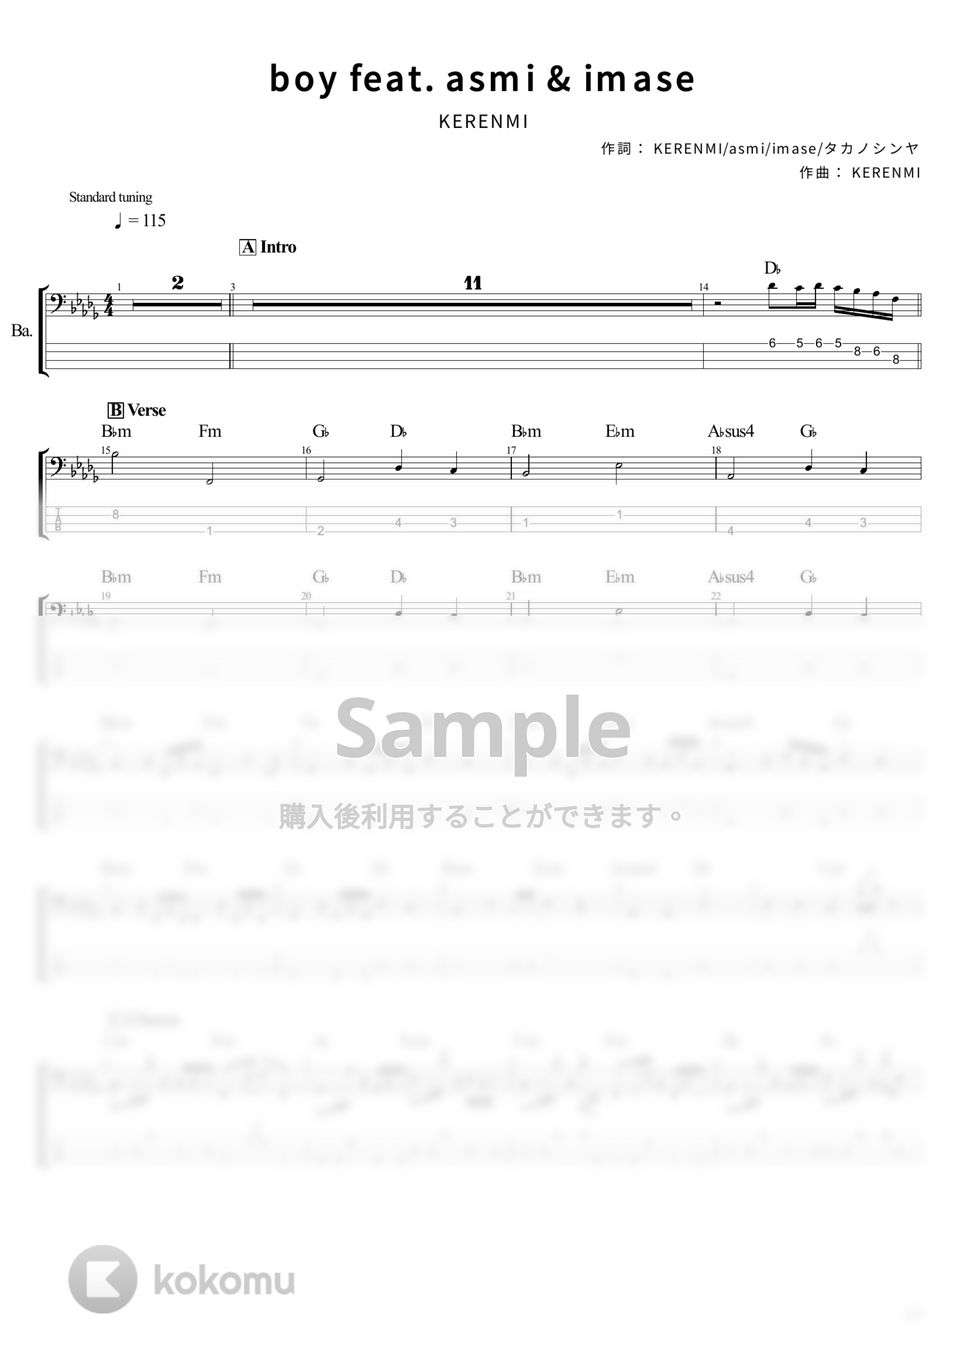 KERENMI - boy feat. asmi & imase (ベース Tab譜 4弦) by T's bass score